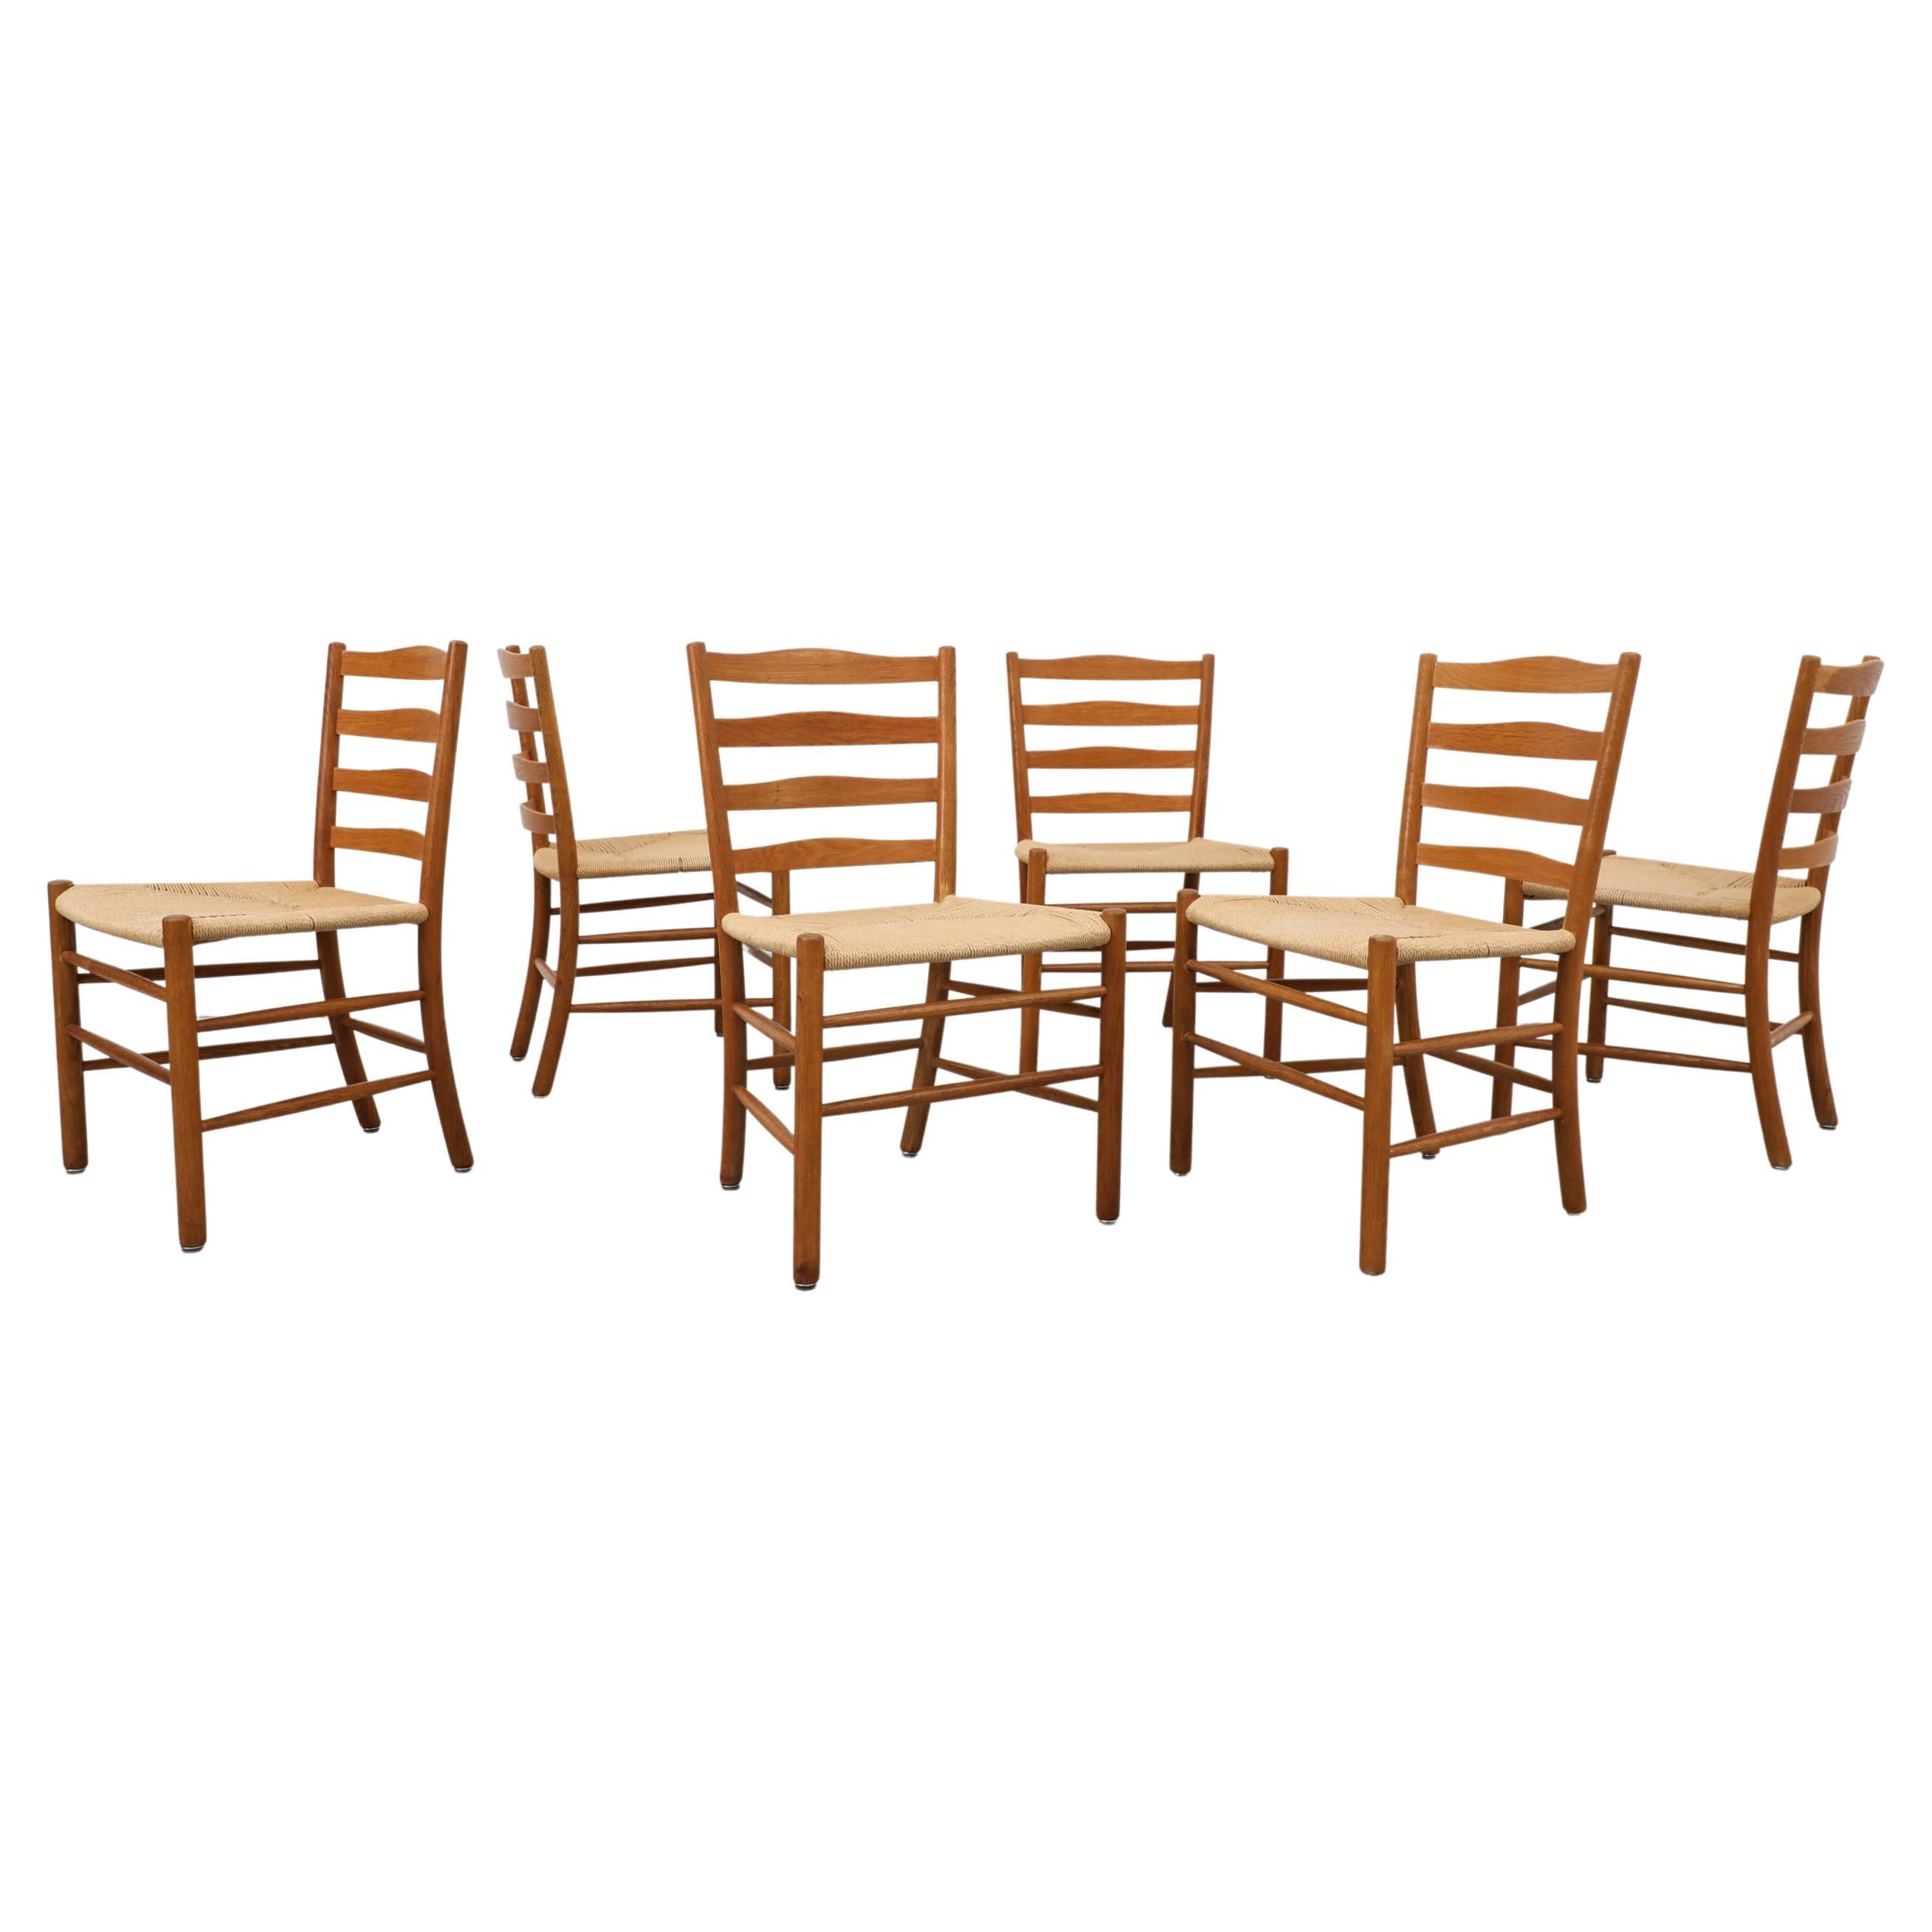 Set of 6 'Kirkestole' Beechwood & Papercord Dining Chairs by Kaare Klint, 1960s